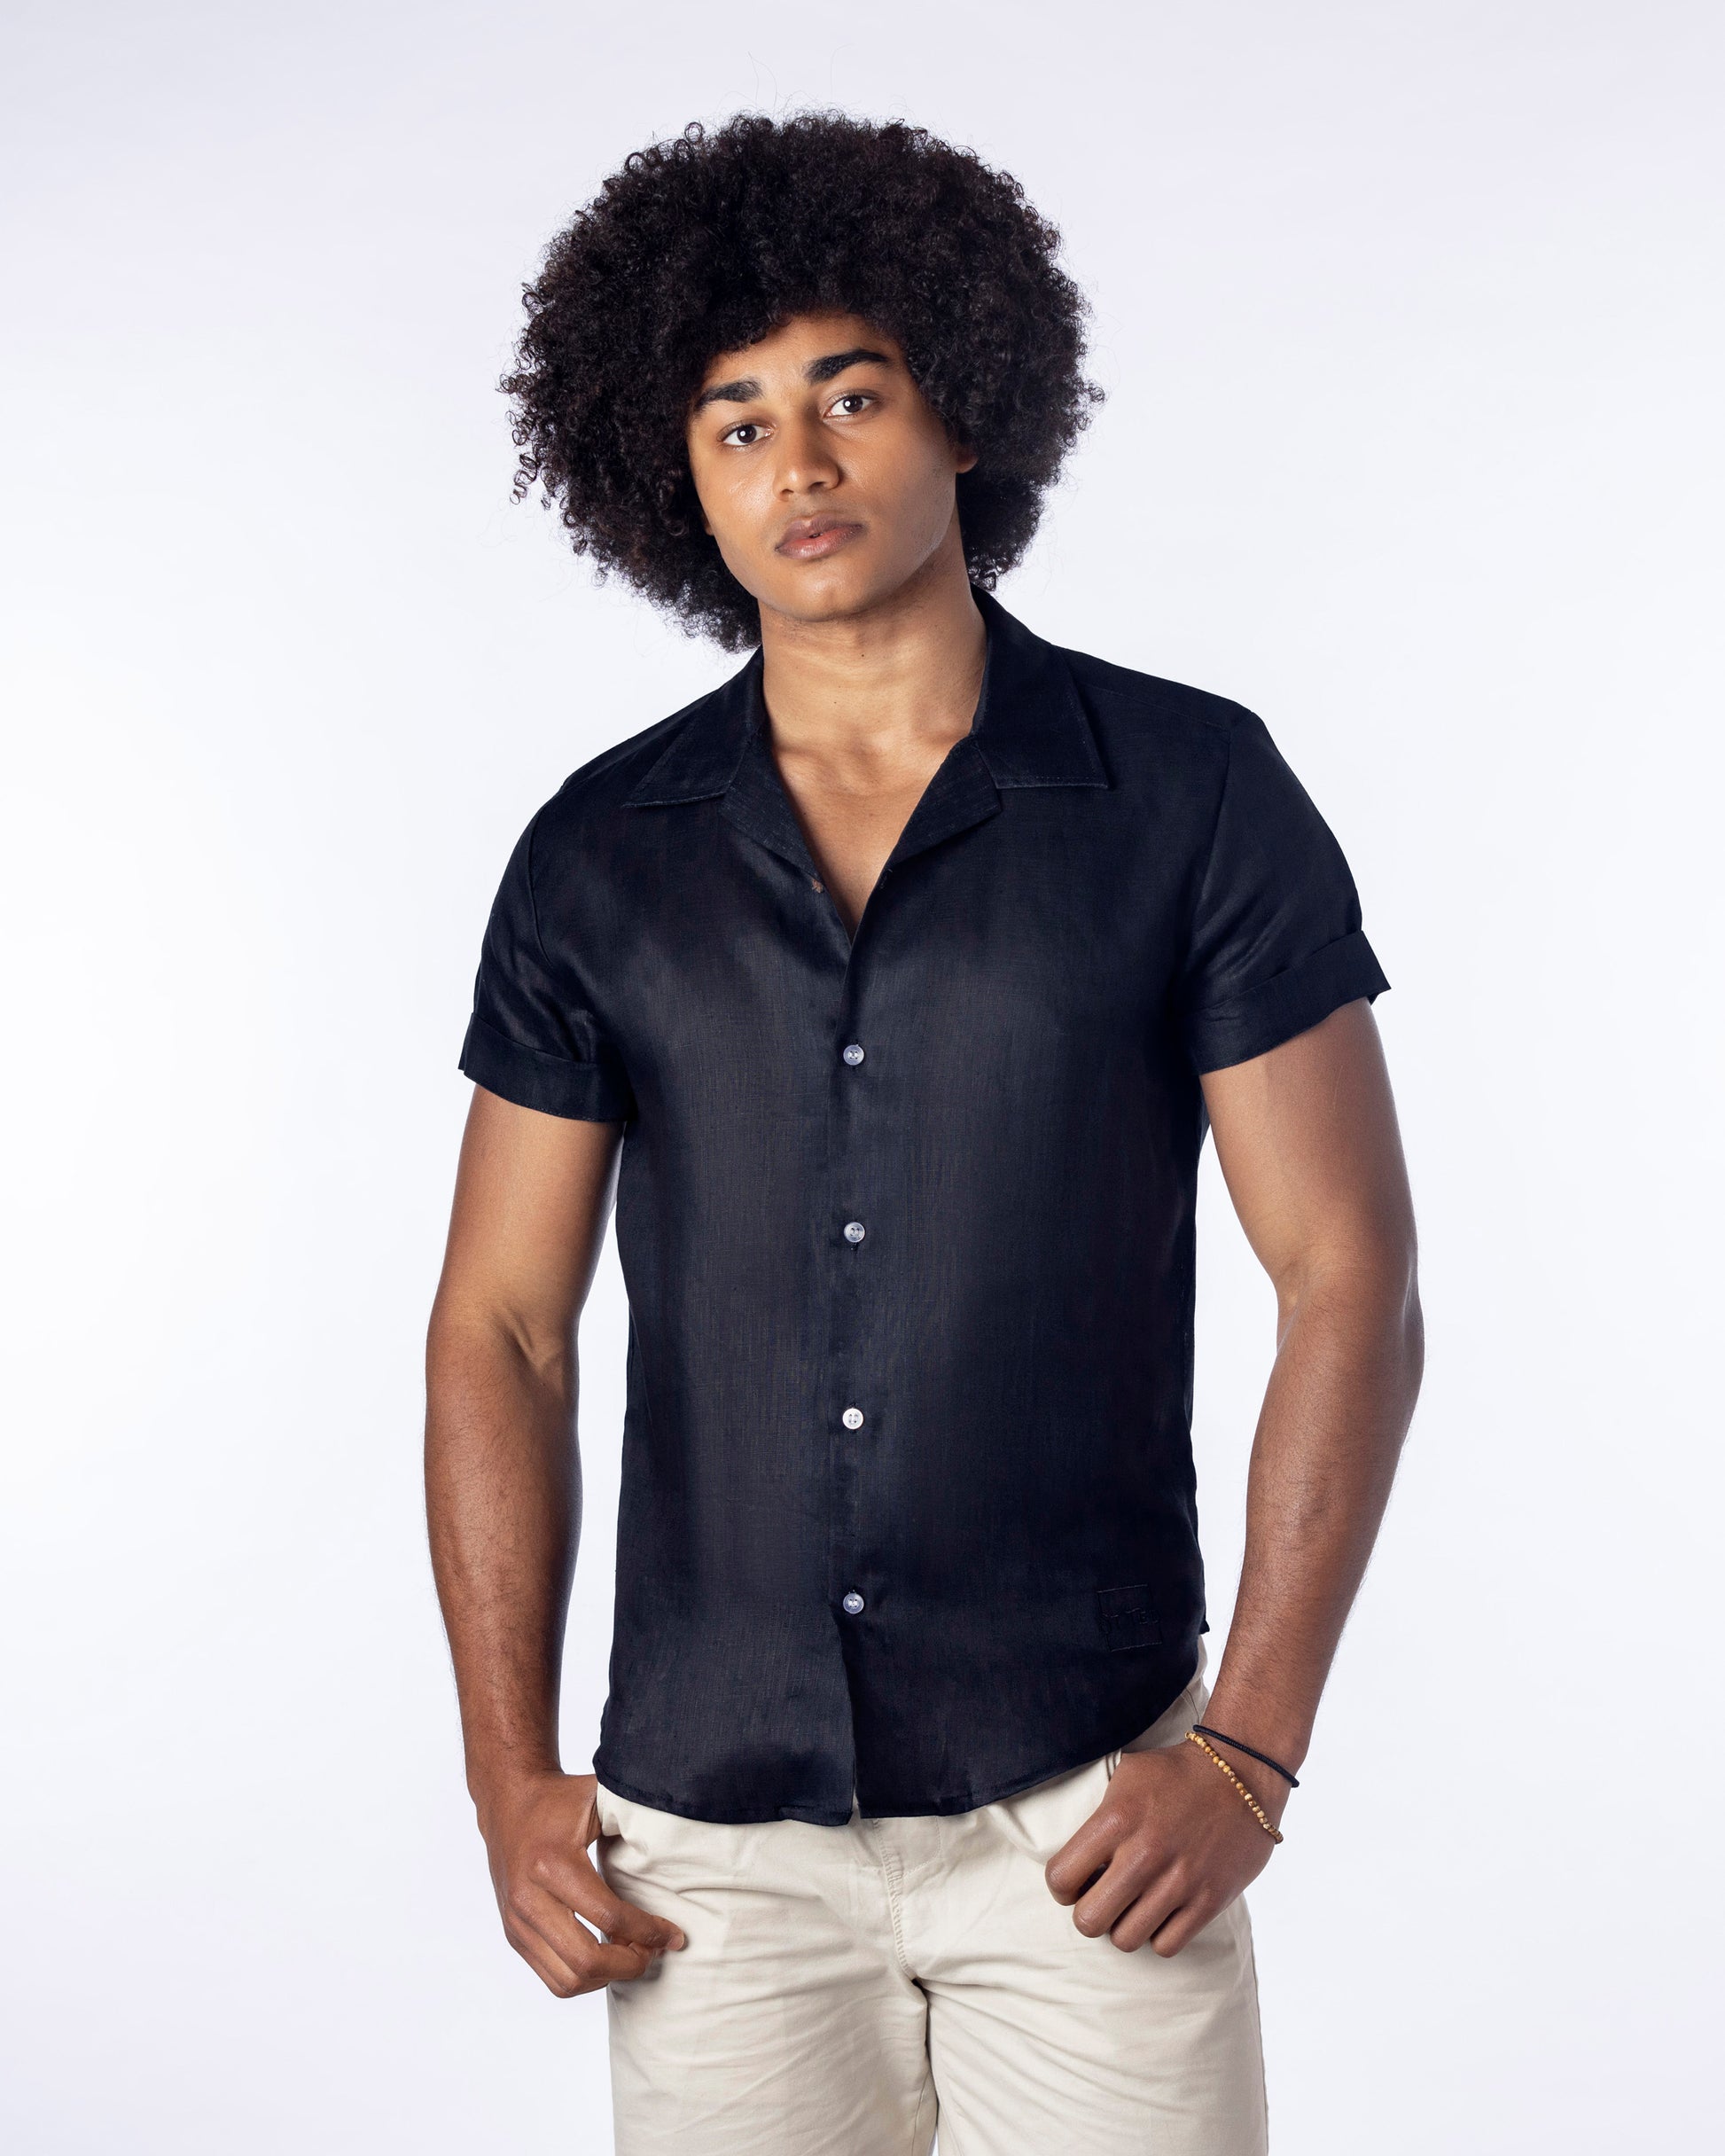 navy Short Sleeve Linen Shirt for Men layback collar shirt party shirt bowling shirt